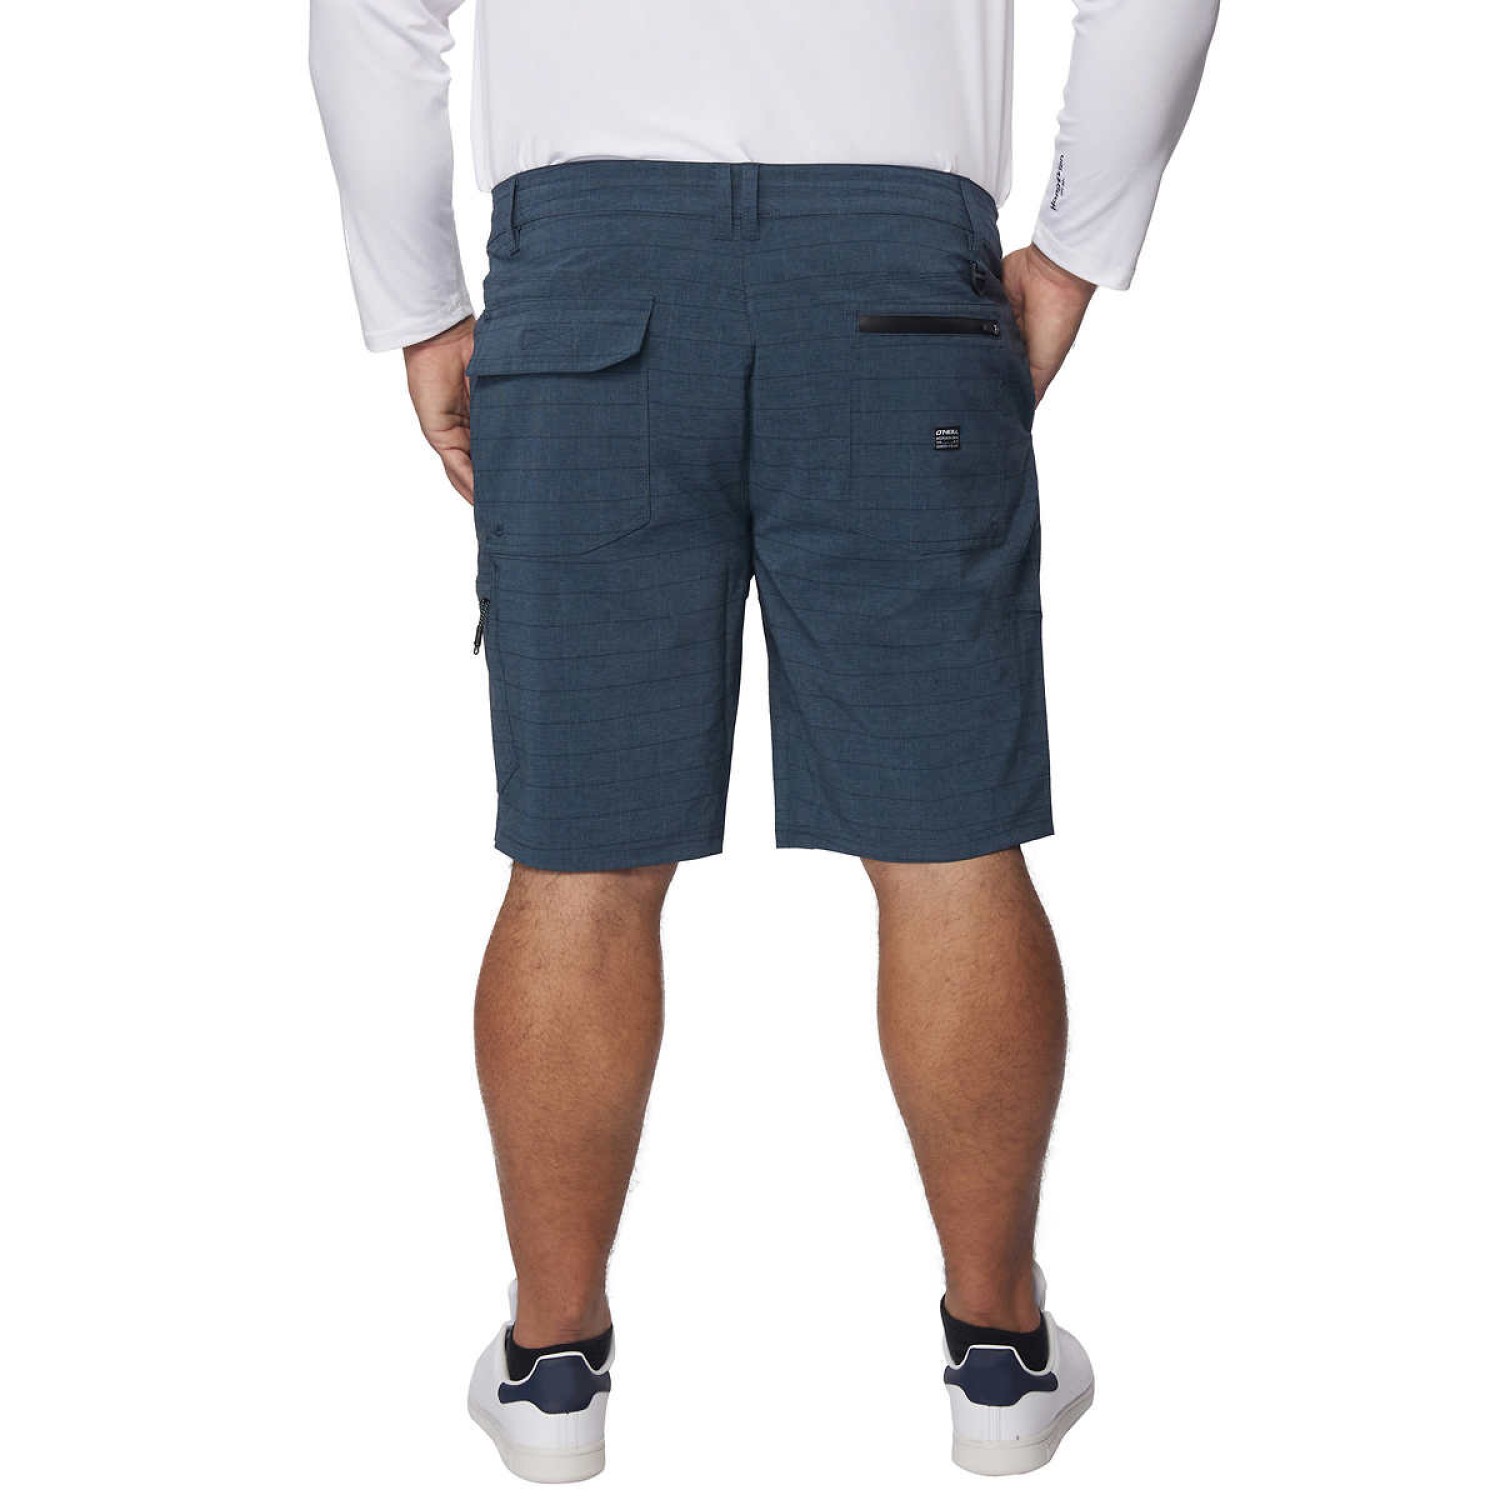 New Men's O'Neill Hybrid Quick Dry Shorts Blue size 40 